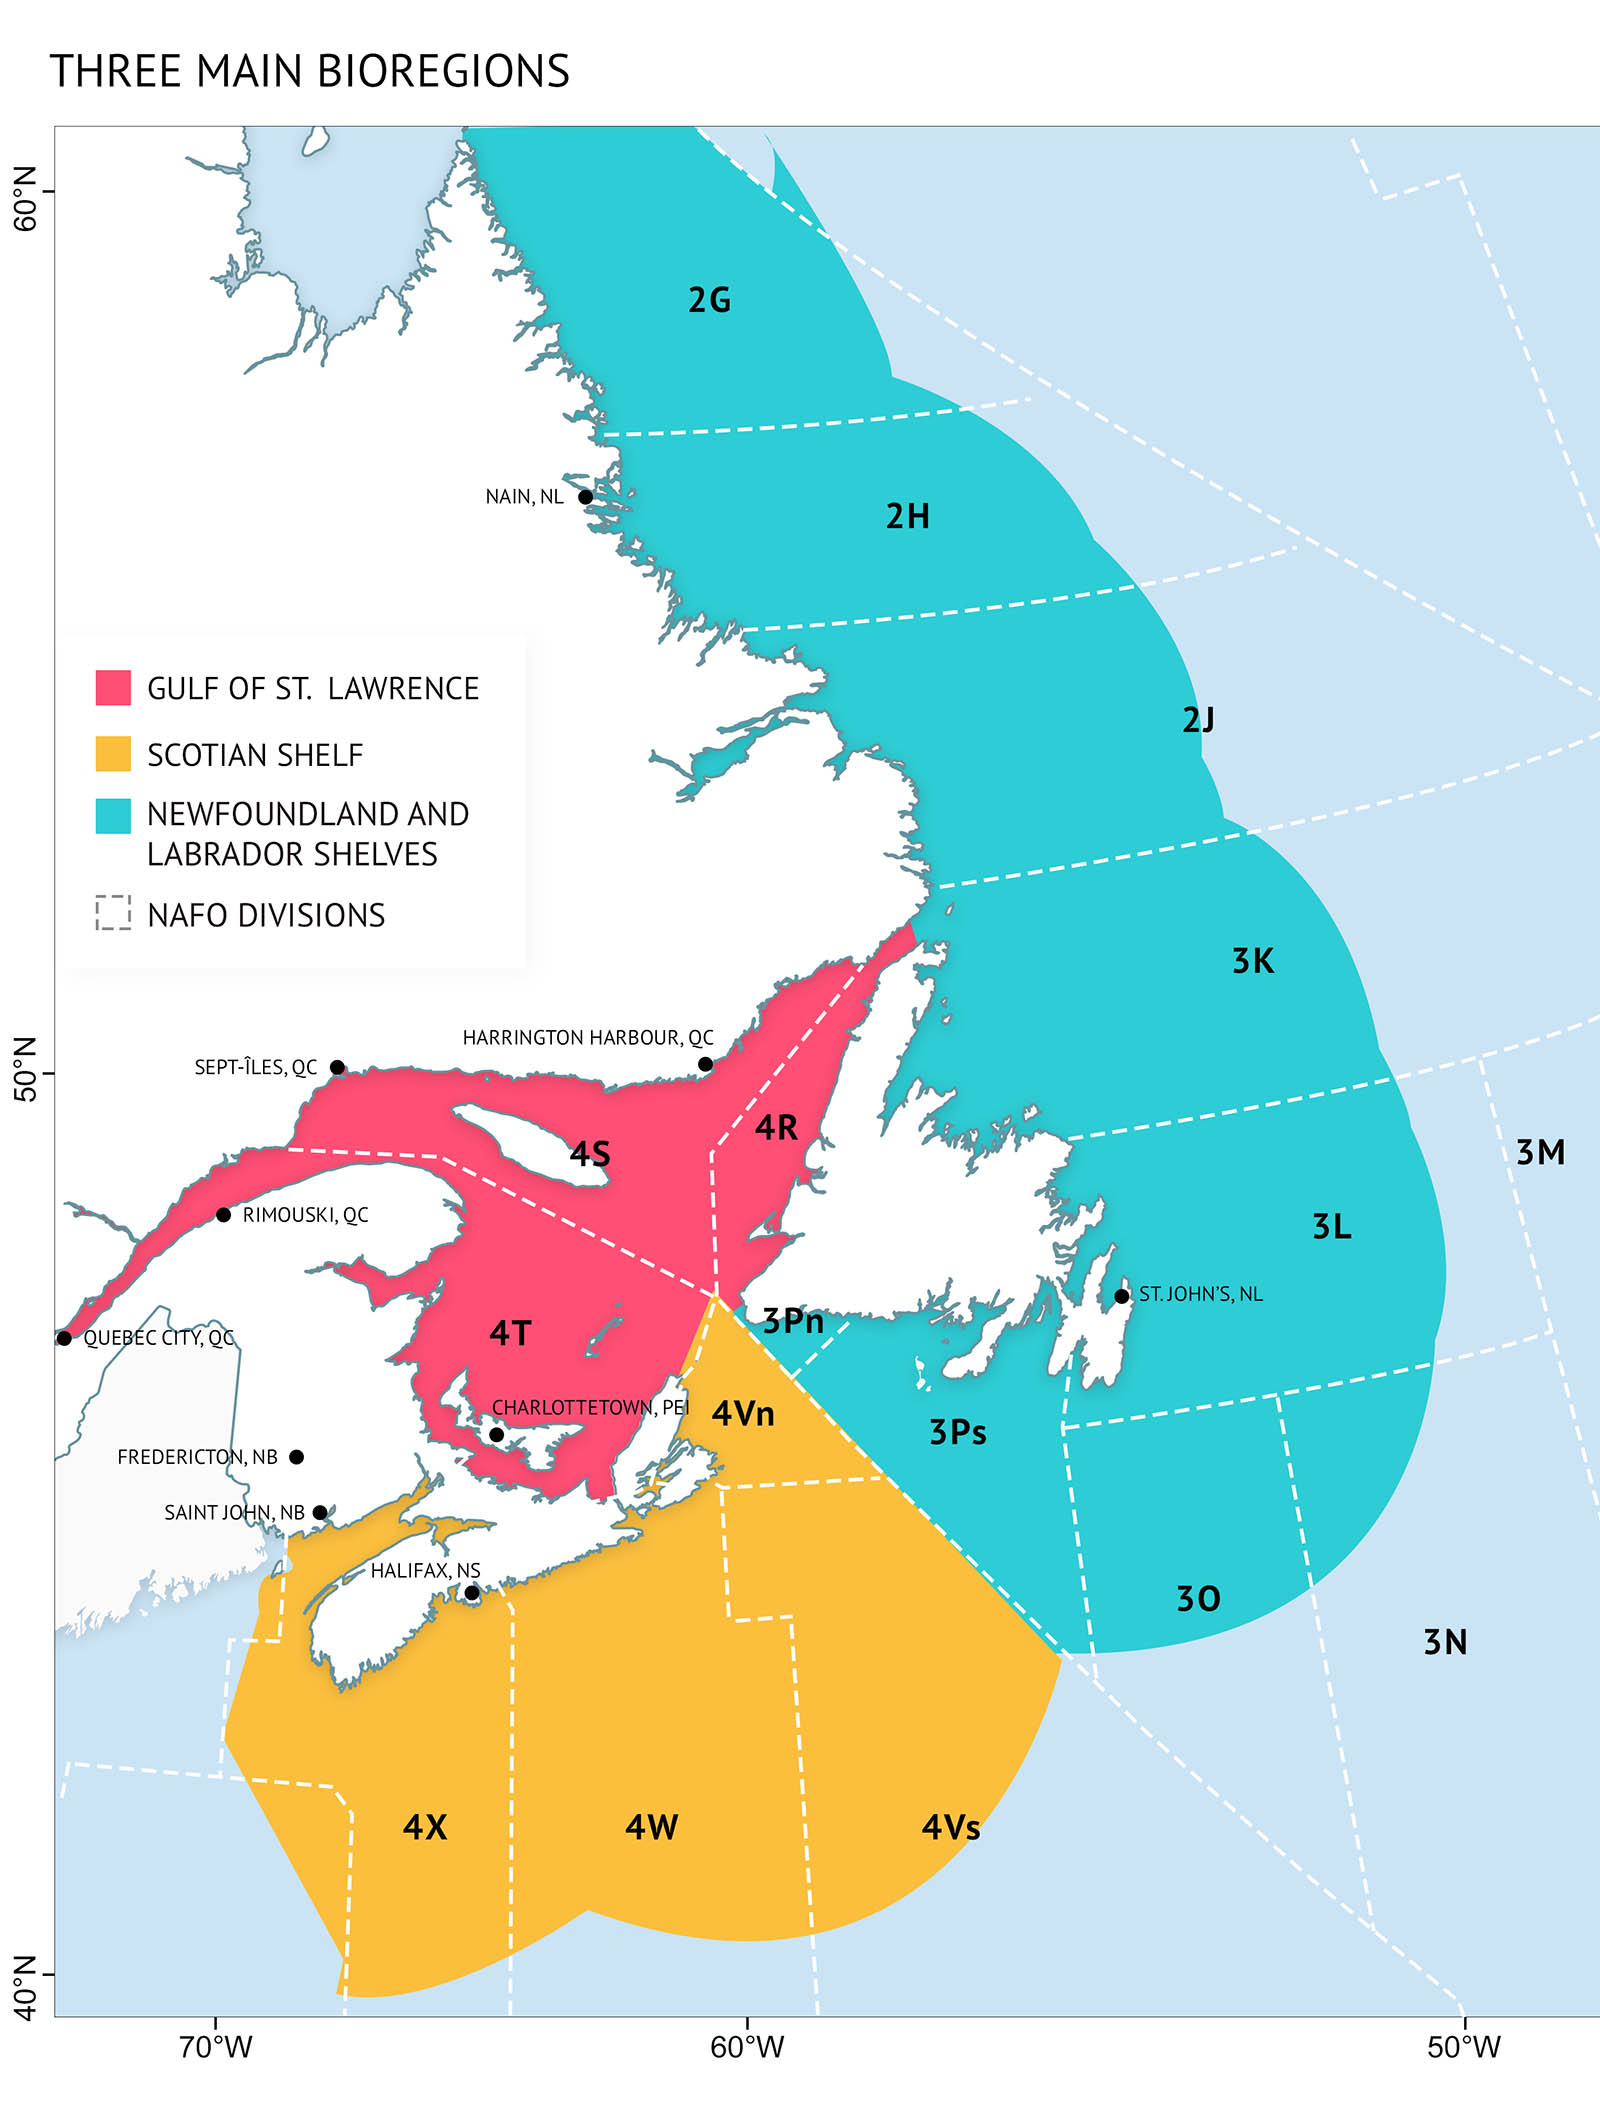 Atlantic Canada – Where We Work – Oceans North